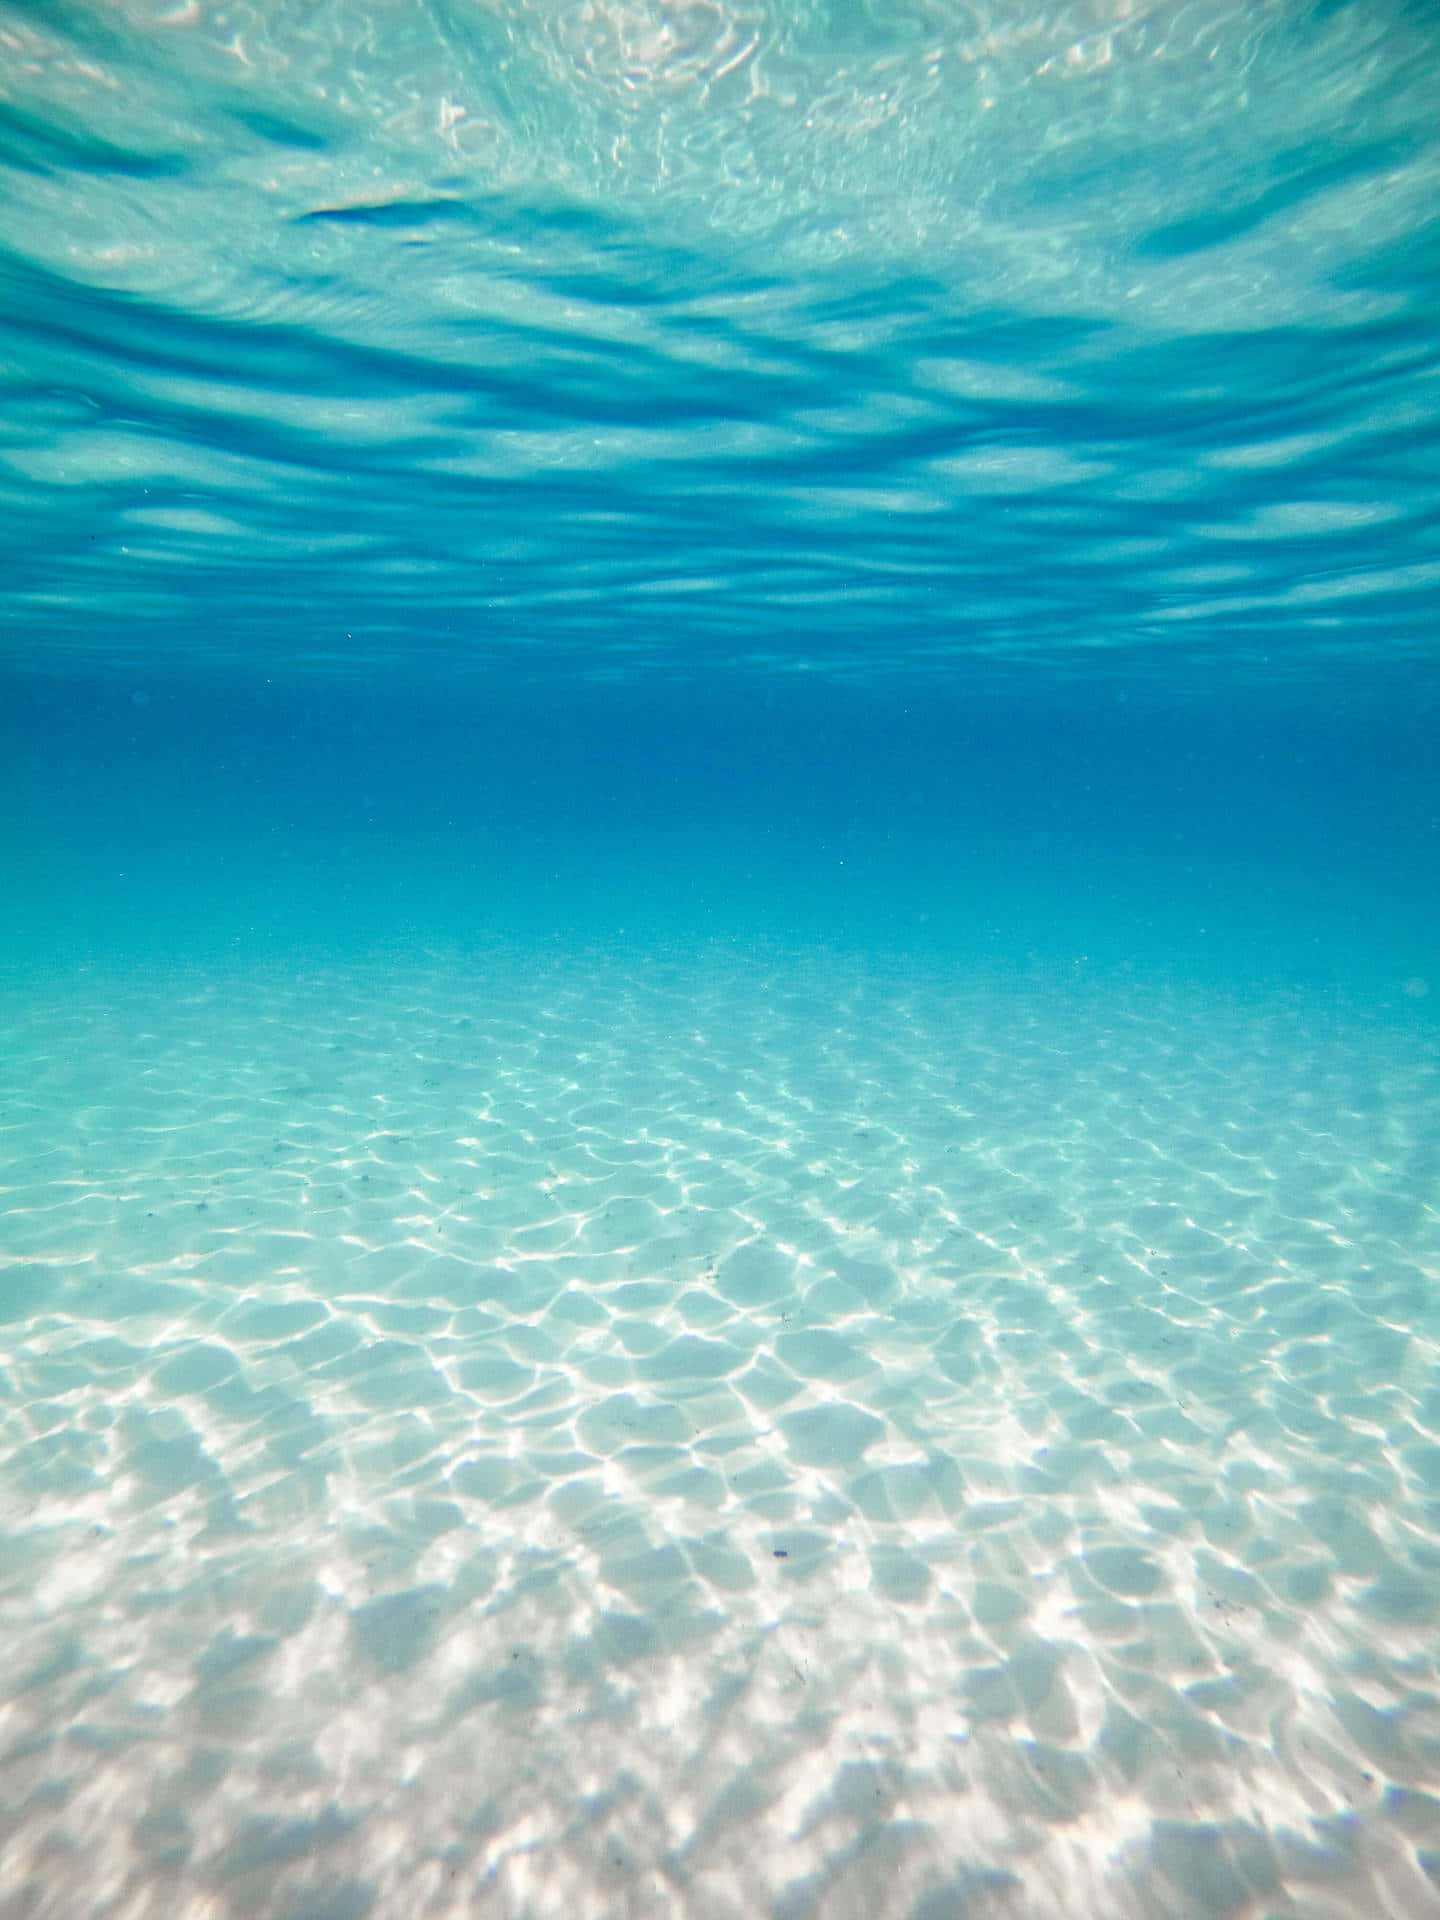 Underwater View Of The Ocean